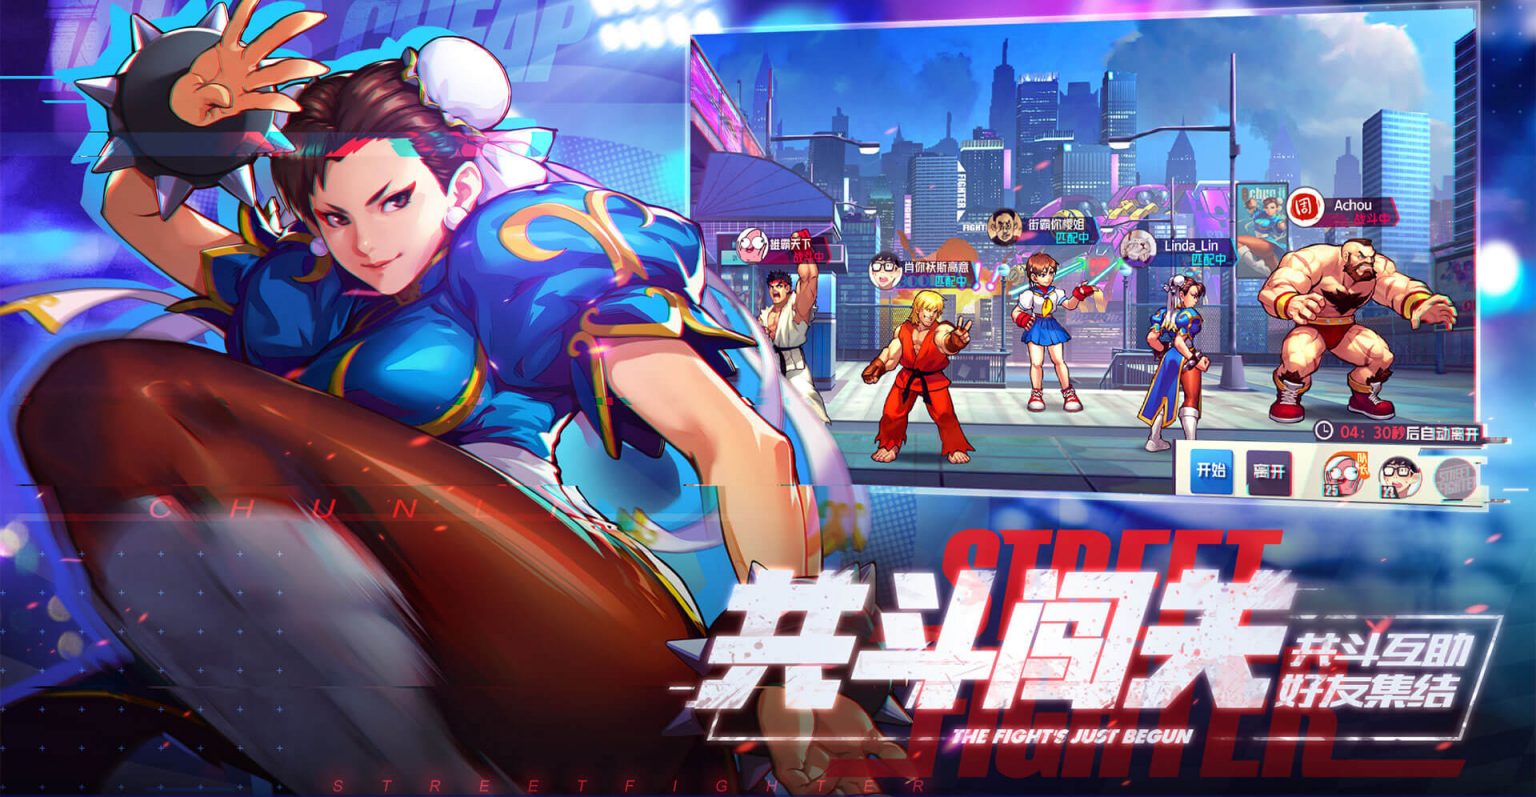 Street Fighter Duel image 2